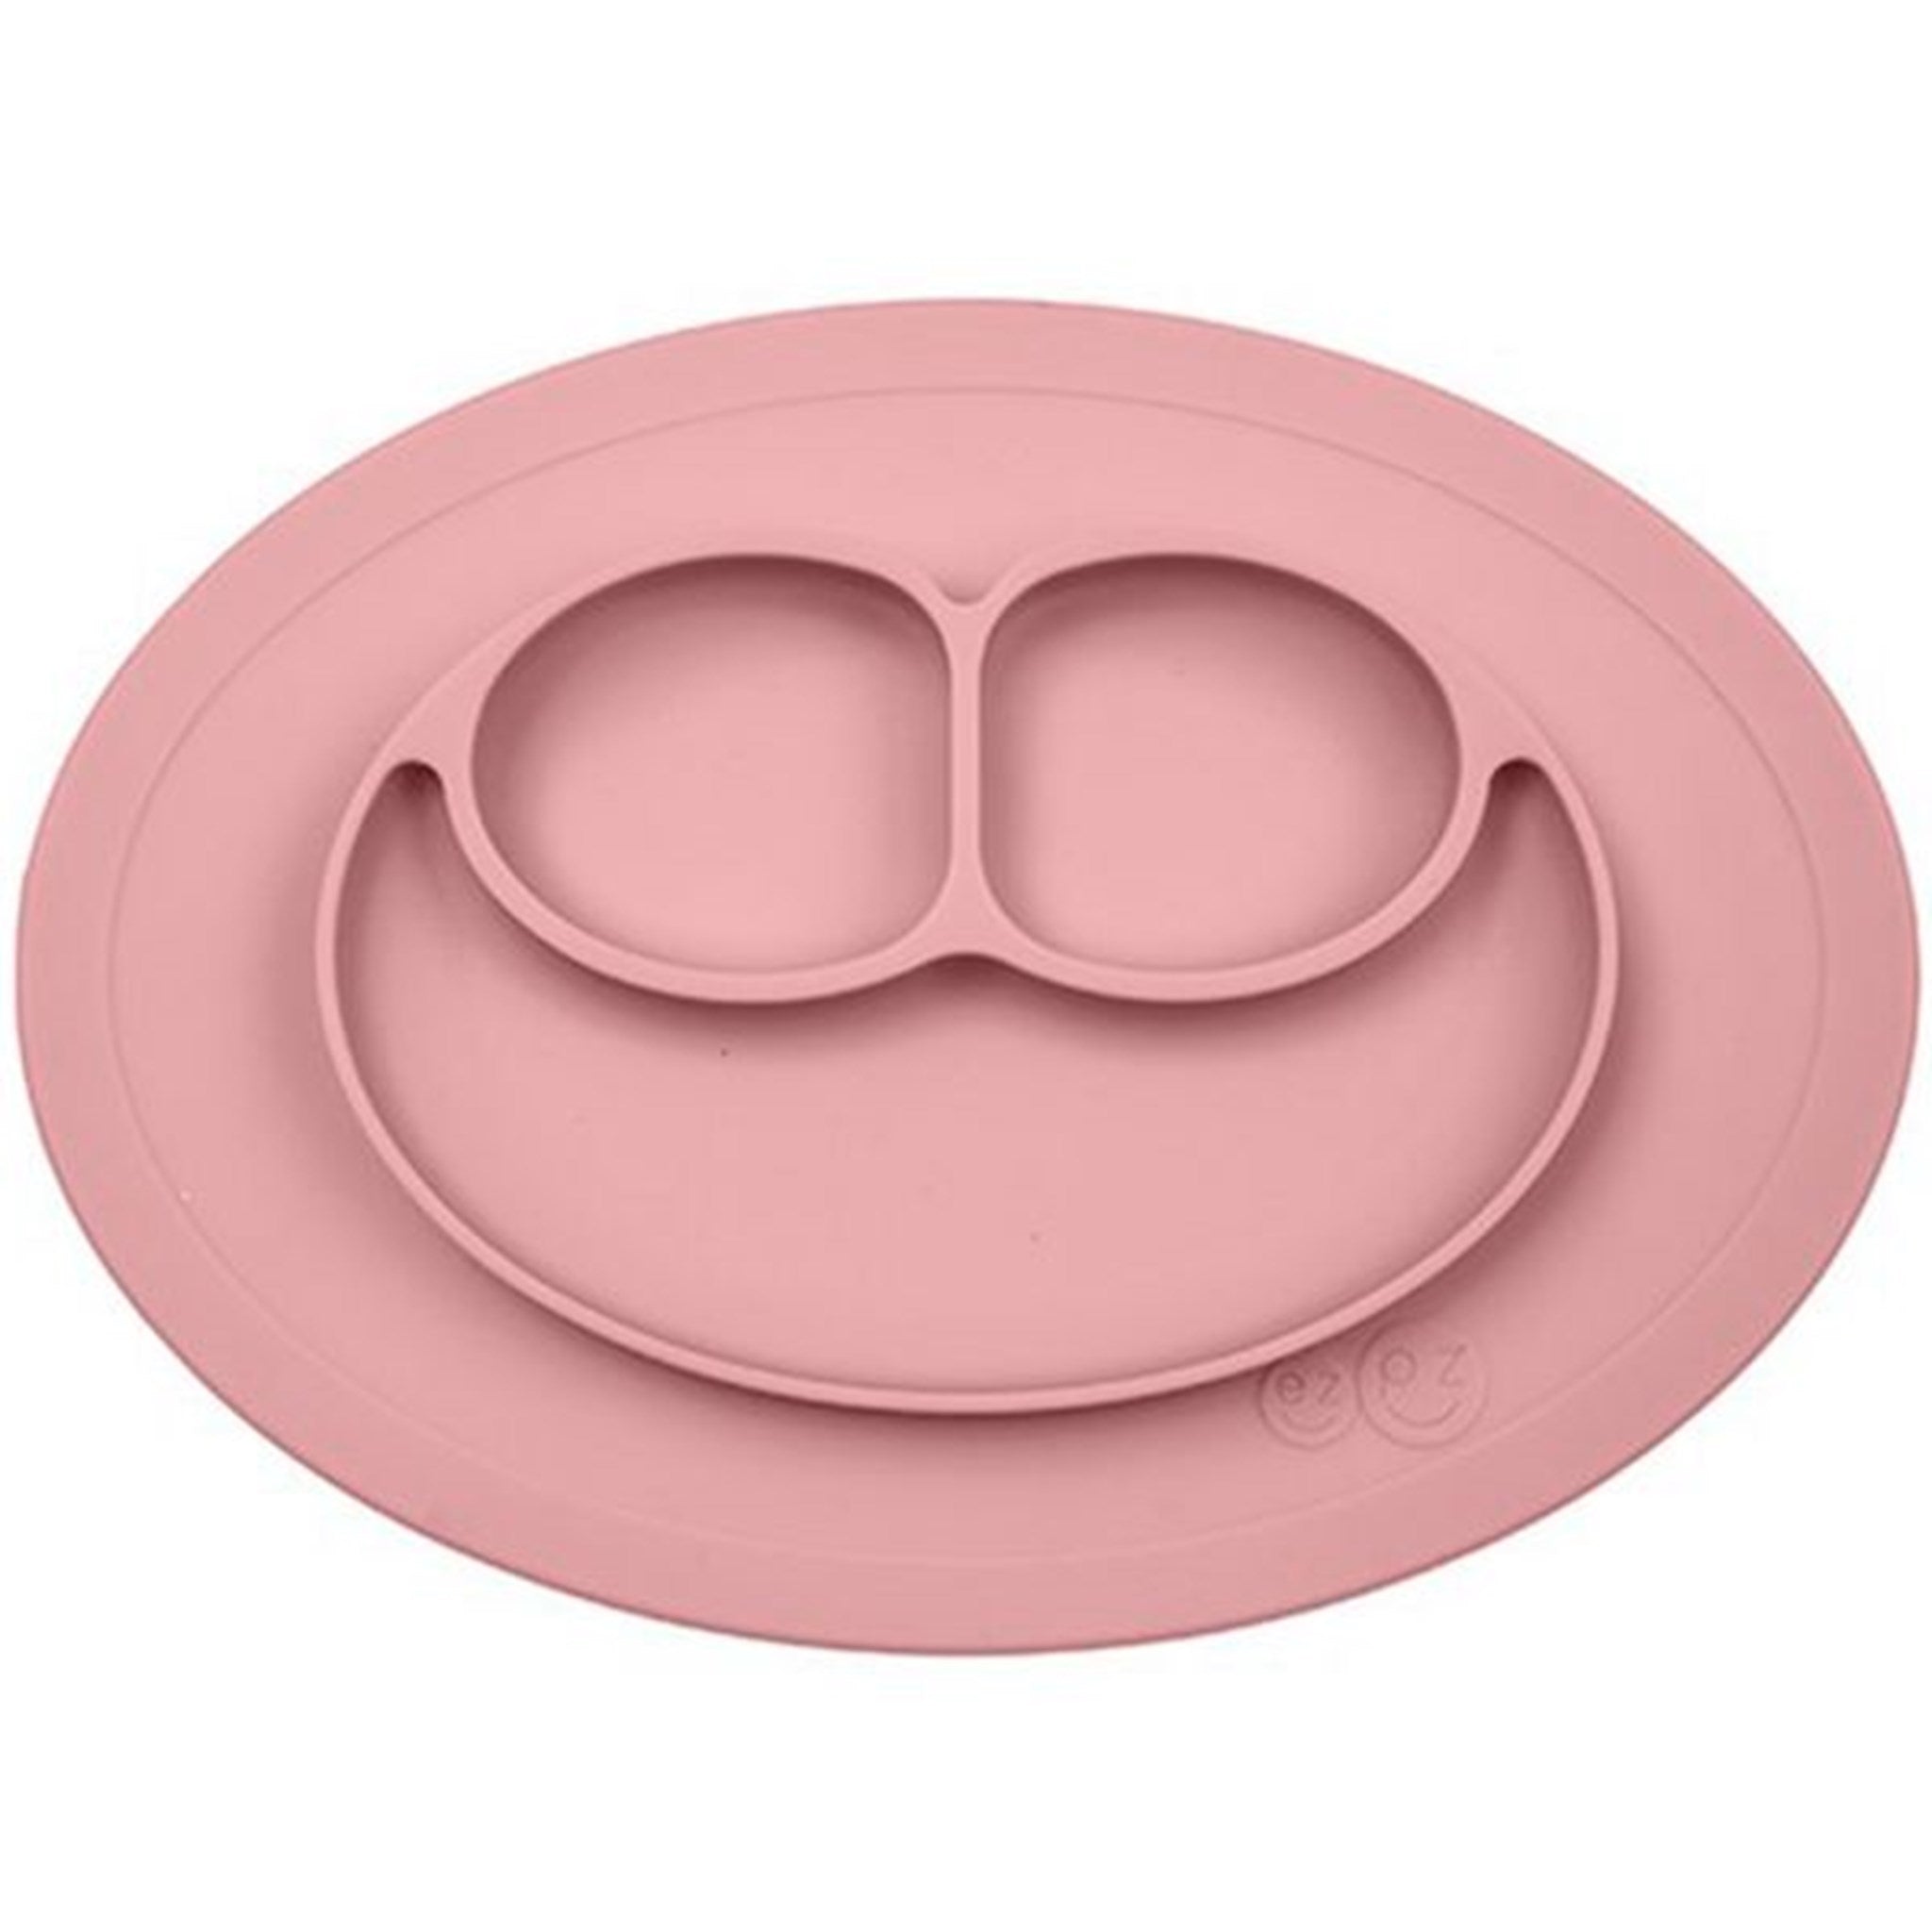 EZPZ Happy Mini Mat Placemat + Plate in One Rose